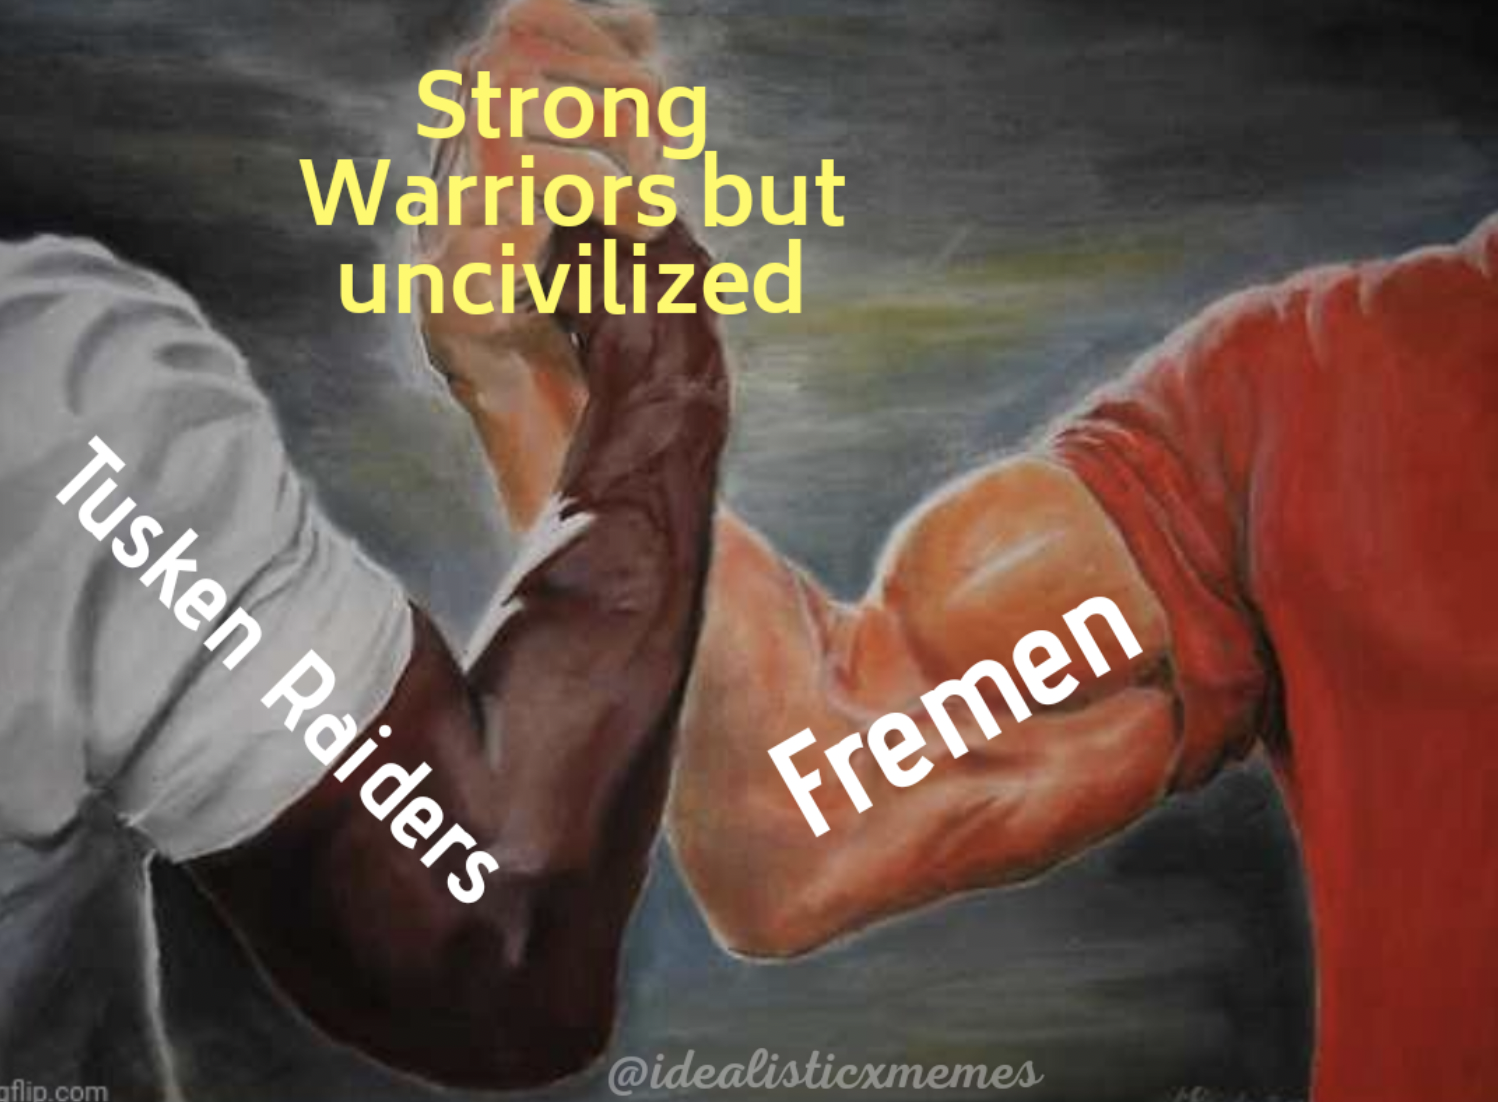 you me handshake meme - Strong Warriors but uncivilized Tusken Raiders flip.com Fremen